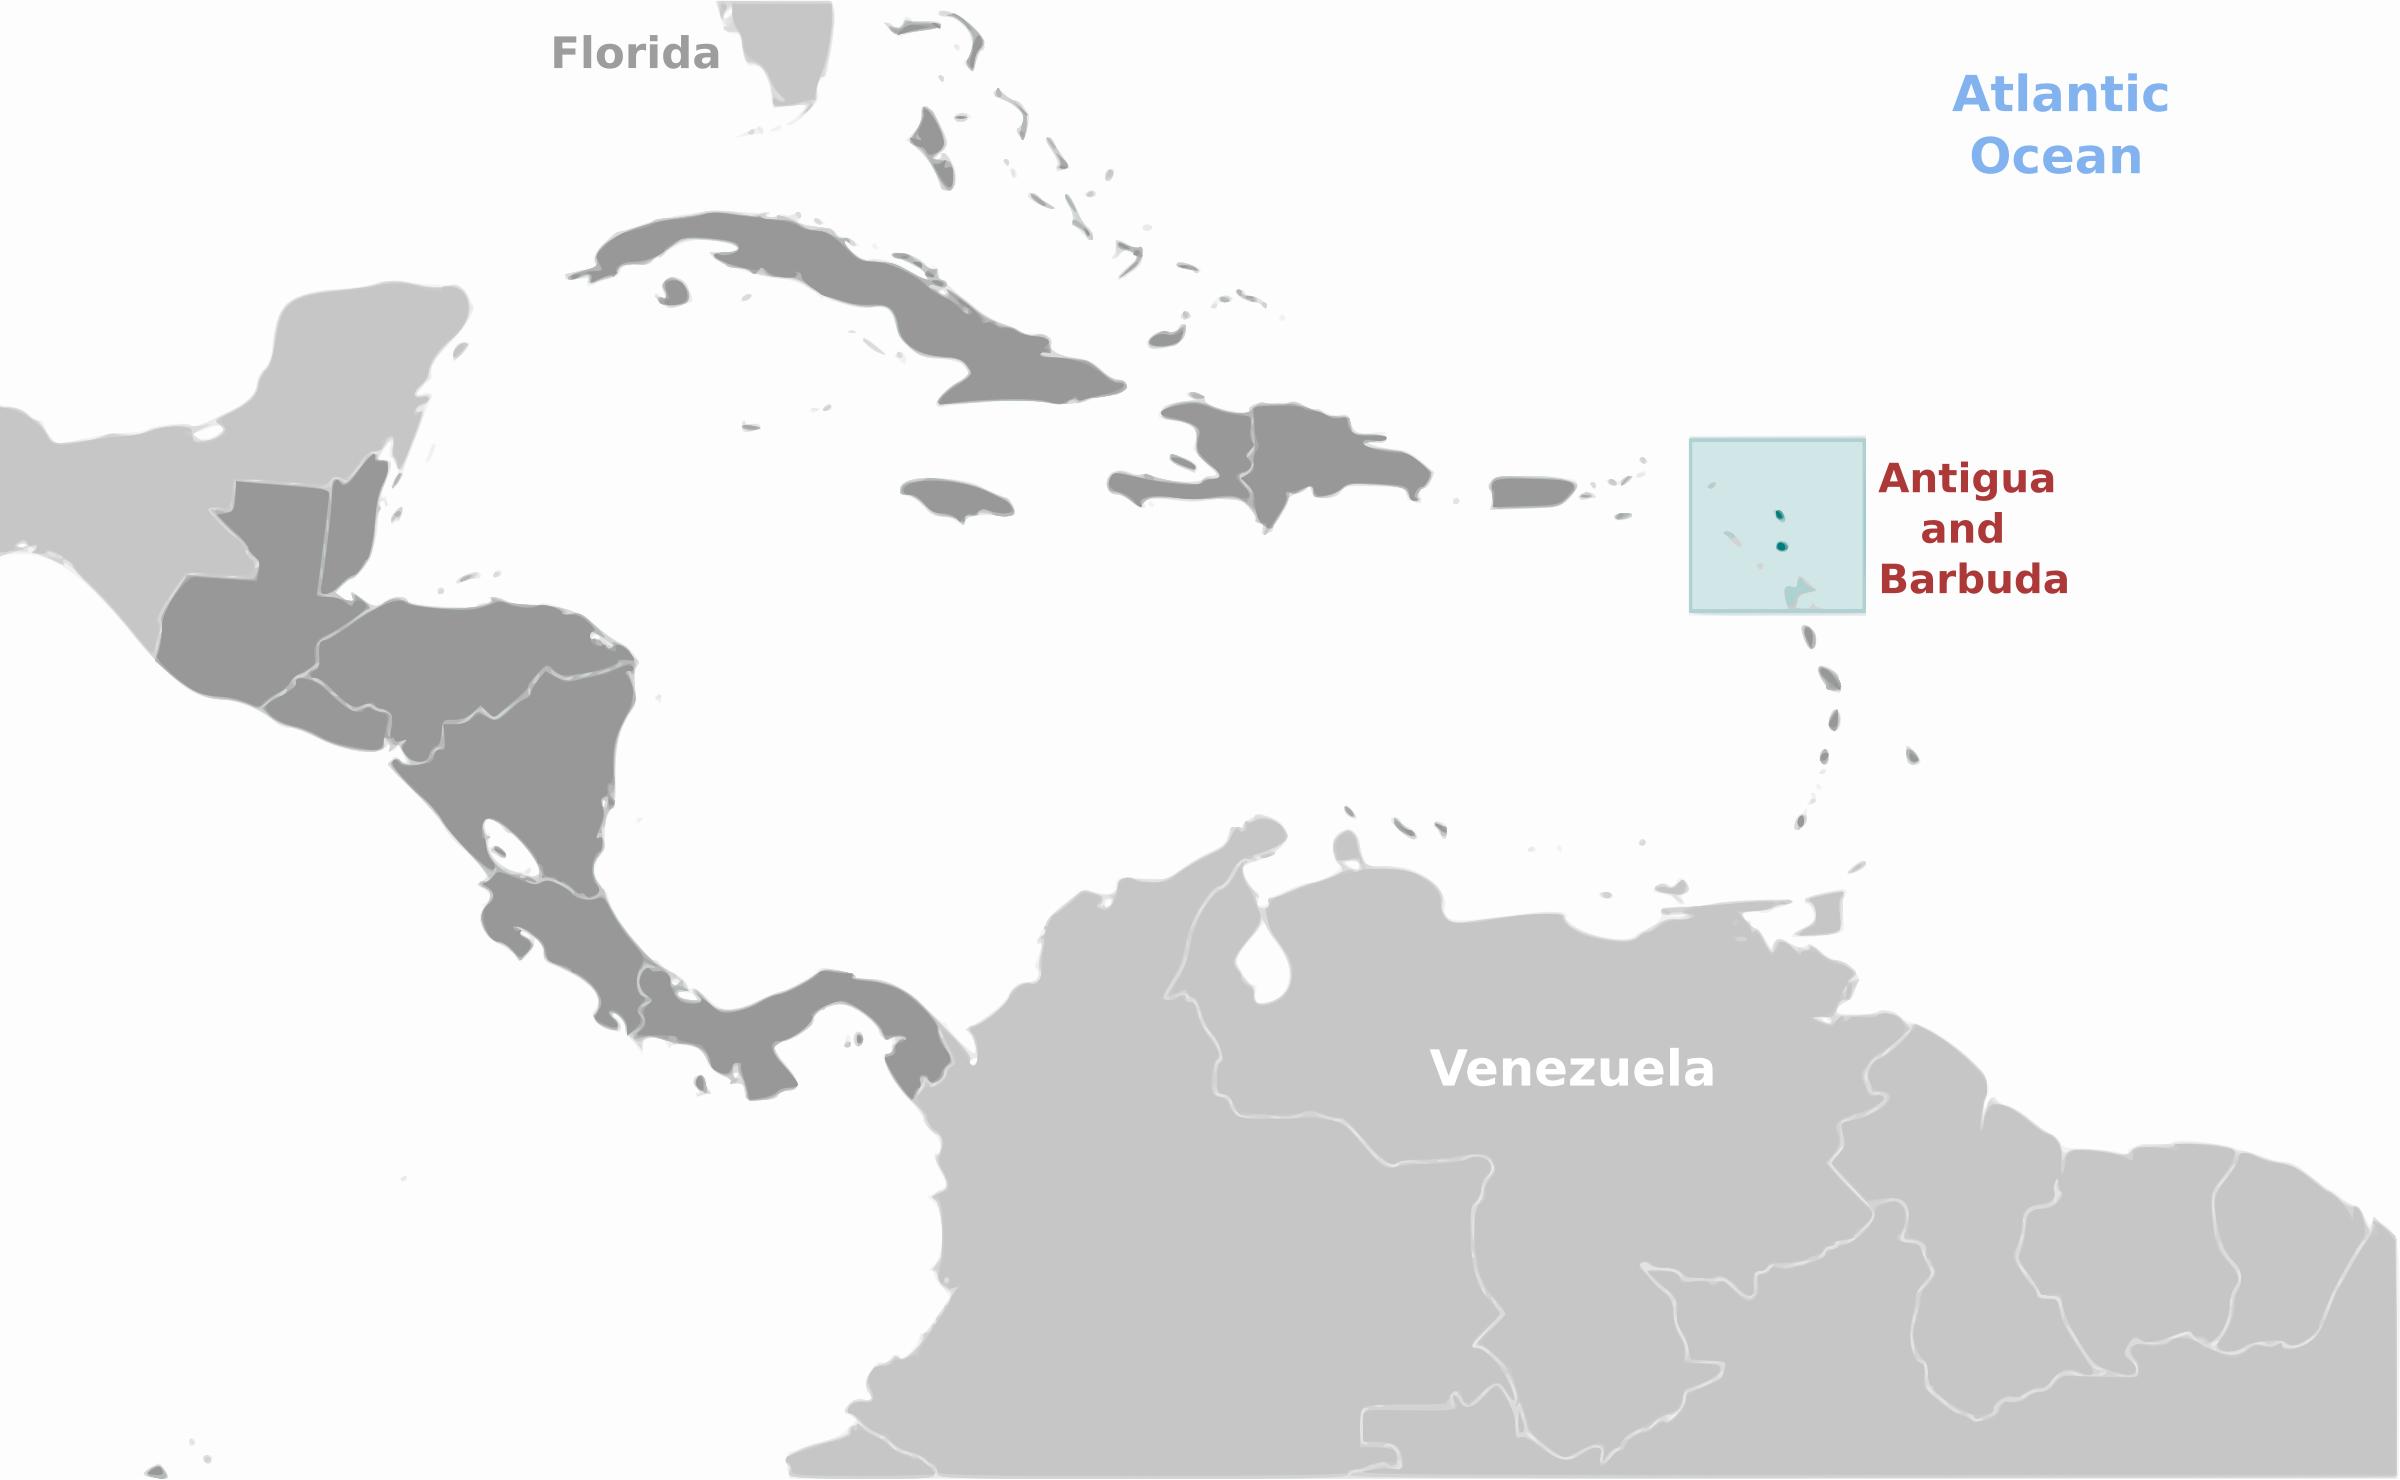 Antigua and Barbuda location label png